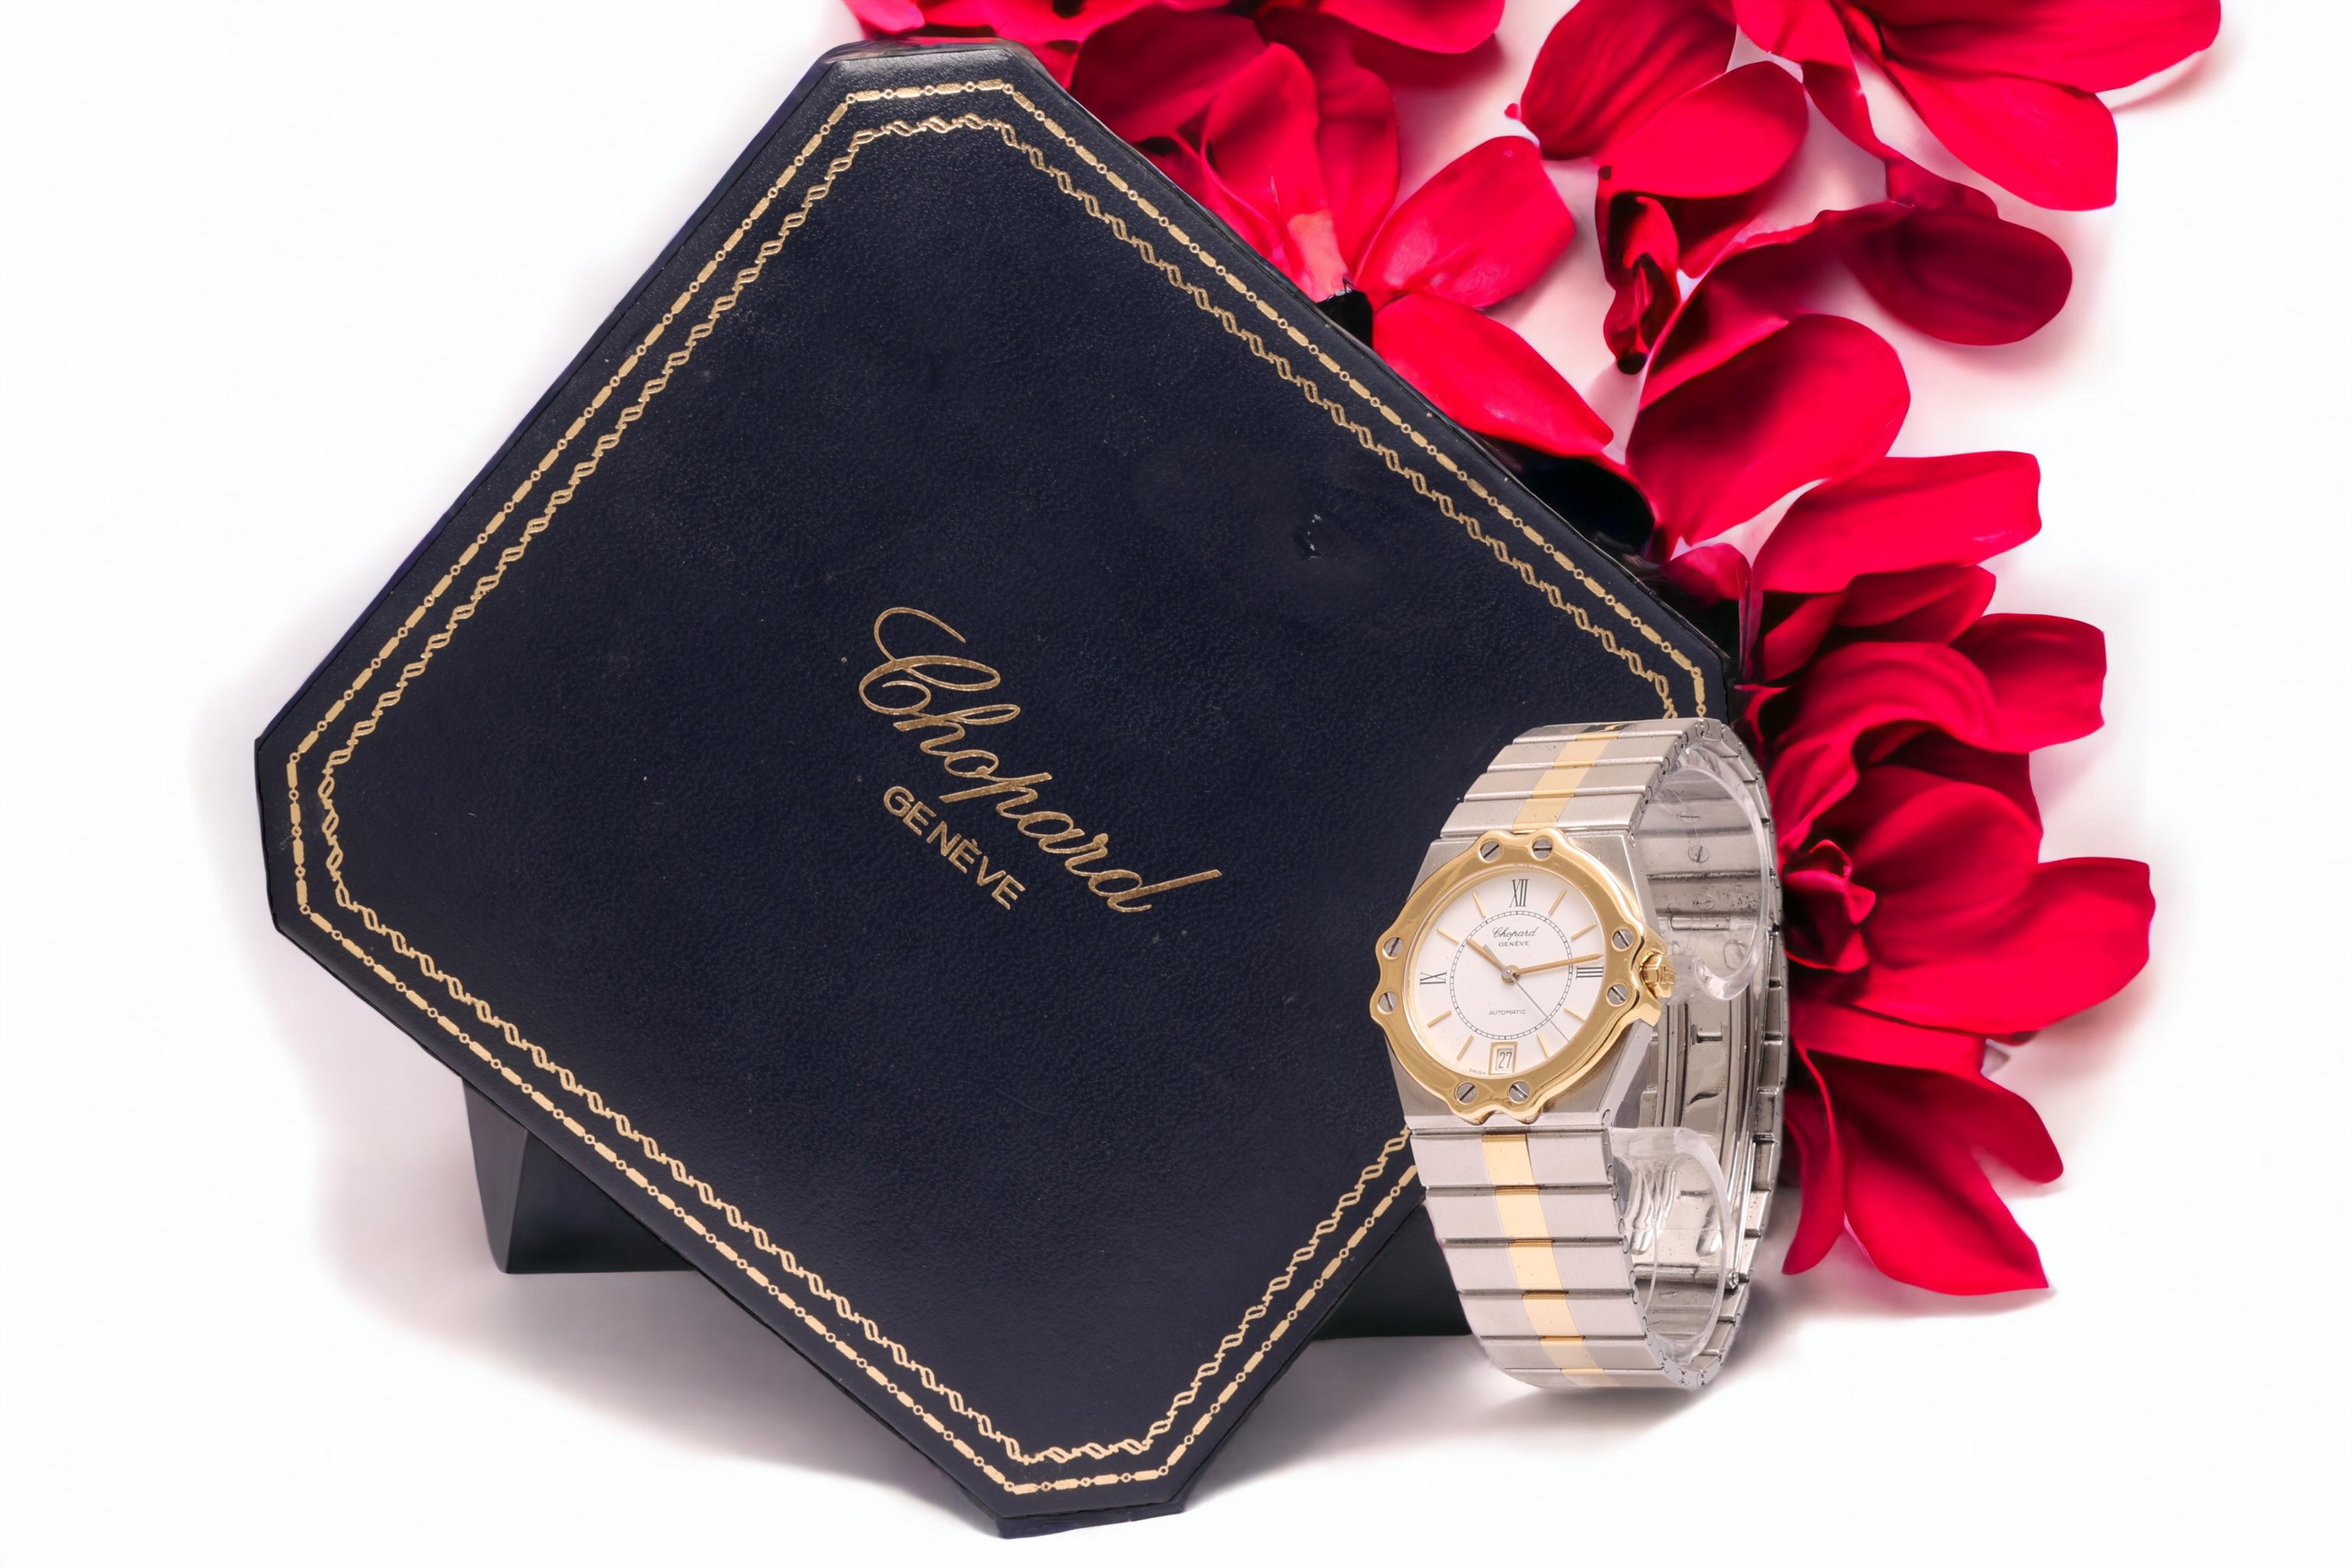 Gold & Steel Chopard St Moritz Automatic Wrist Watch For Sale 7